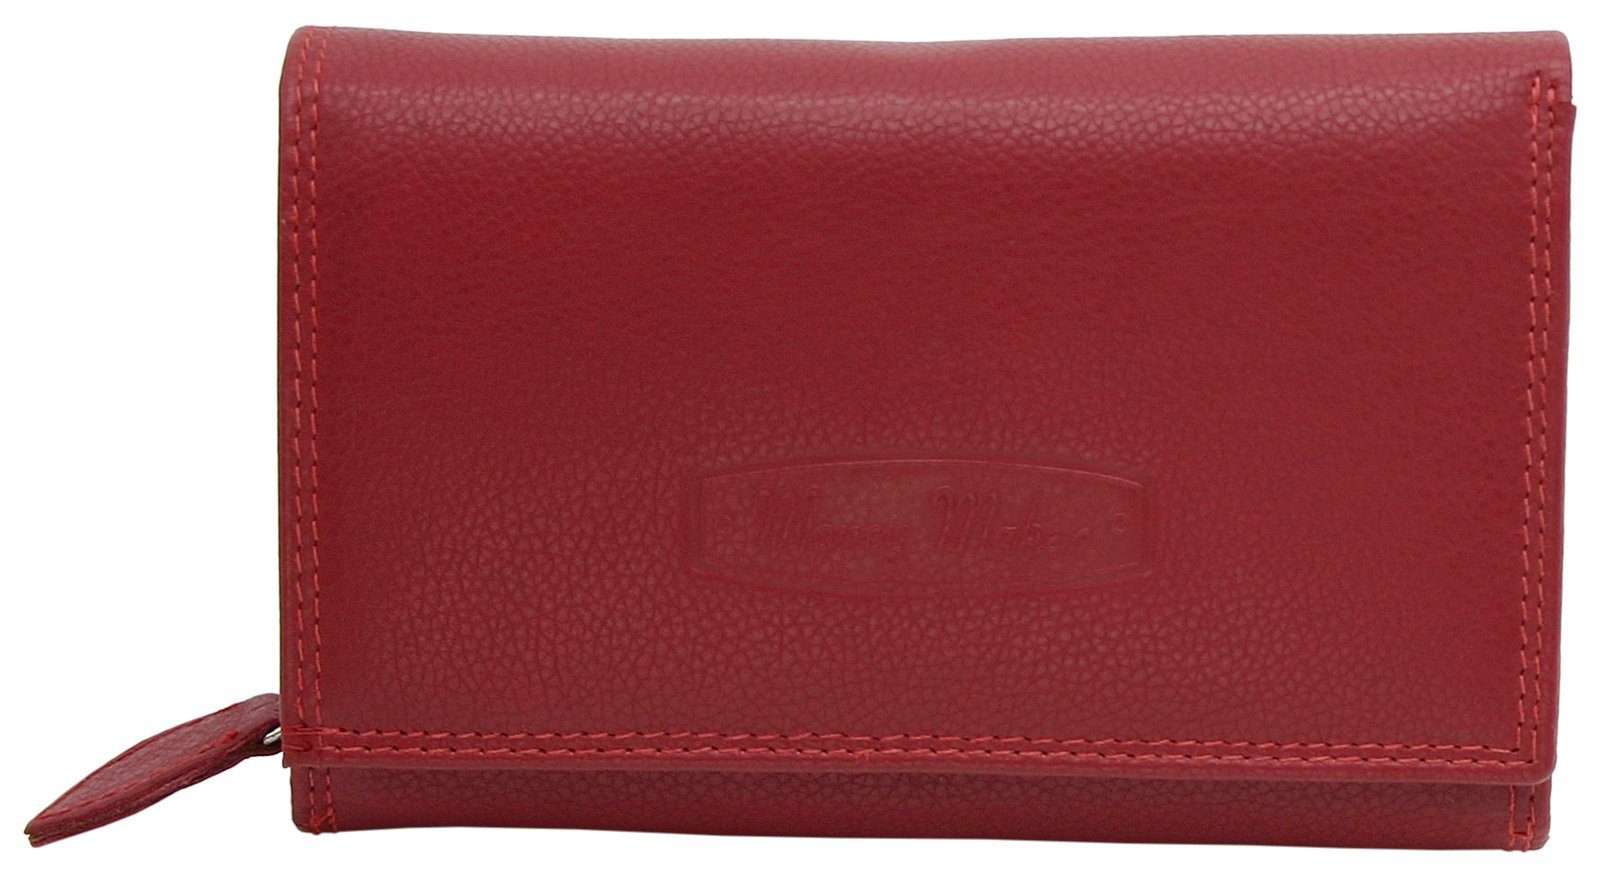 J JONES JENNIFER JONES Geldbörse - Großes Damen Portemonnaie mit RFID Schutz, Echt-Leder Rot